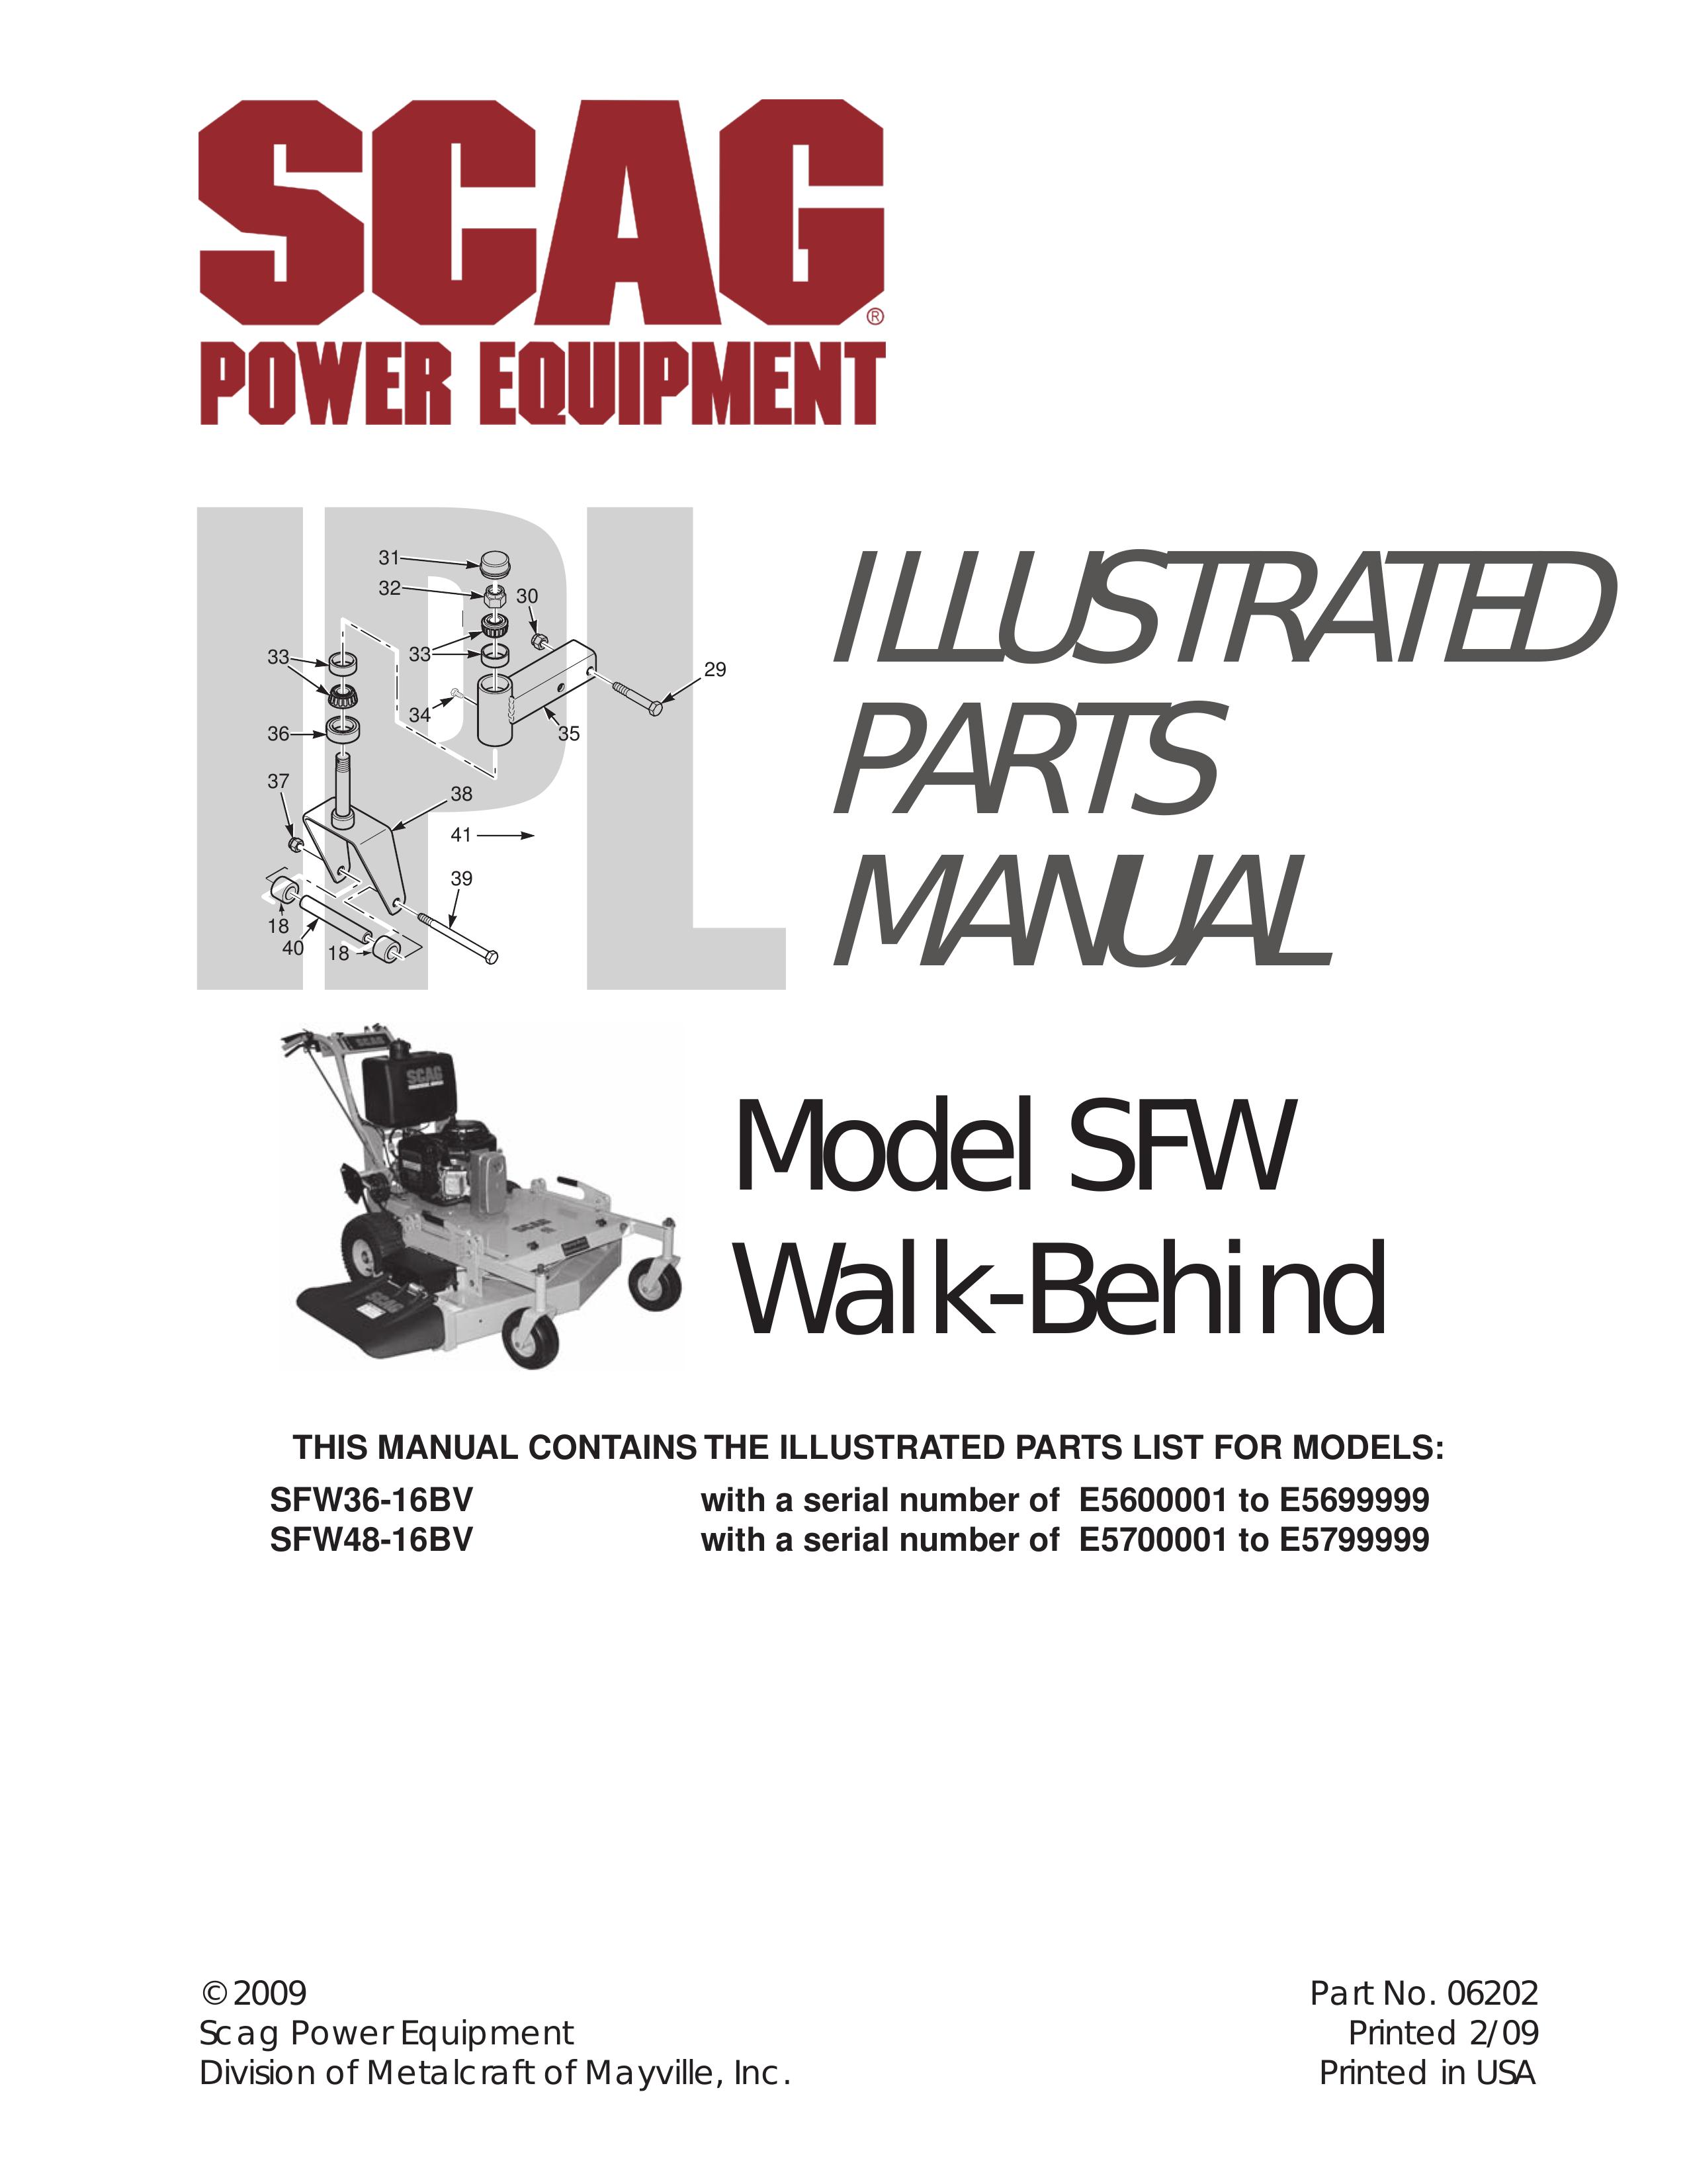 Scag Power Equipment SFW36-16BV Portable Generator User Manual